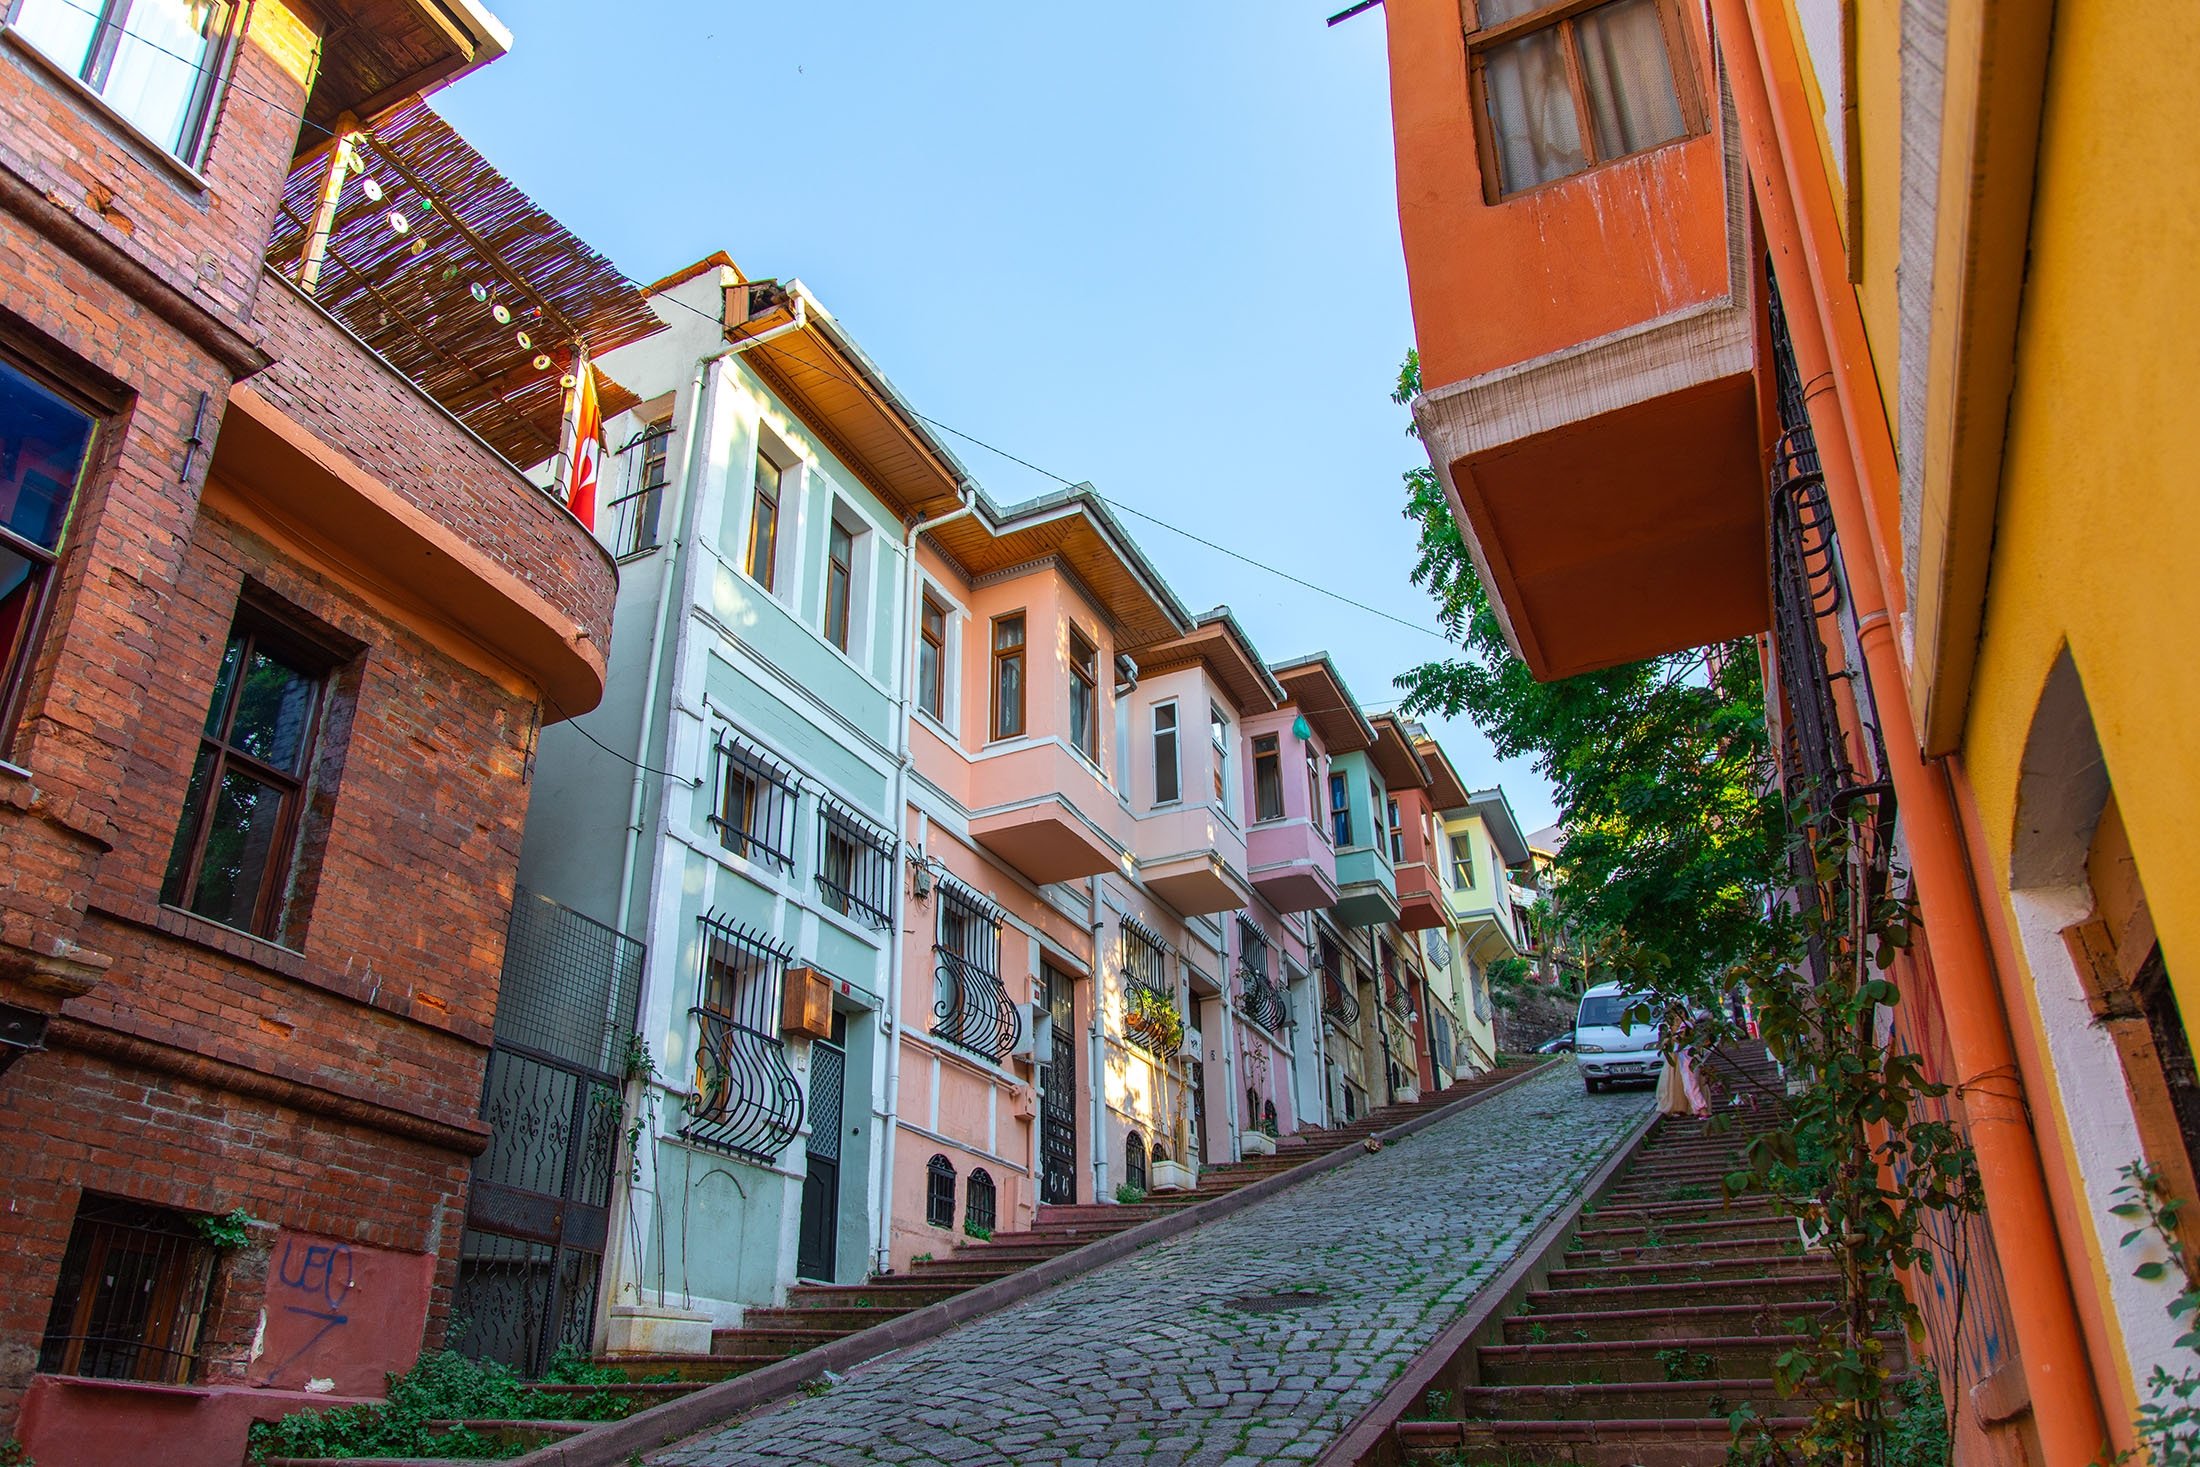 Merdivenli Yokuş street. (Shutterstock Photo)